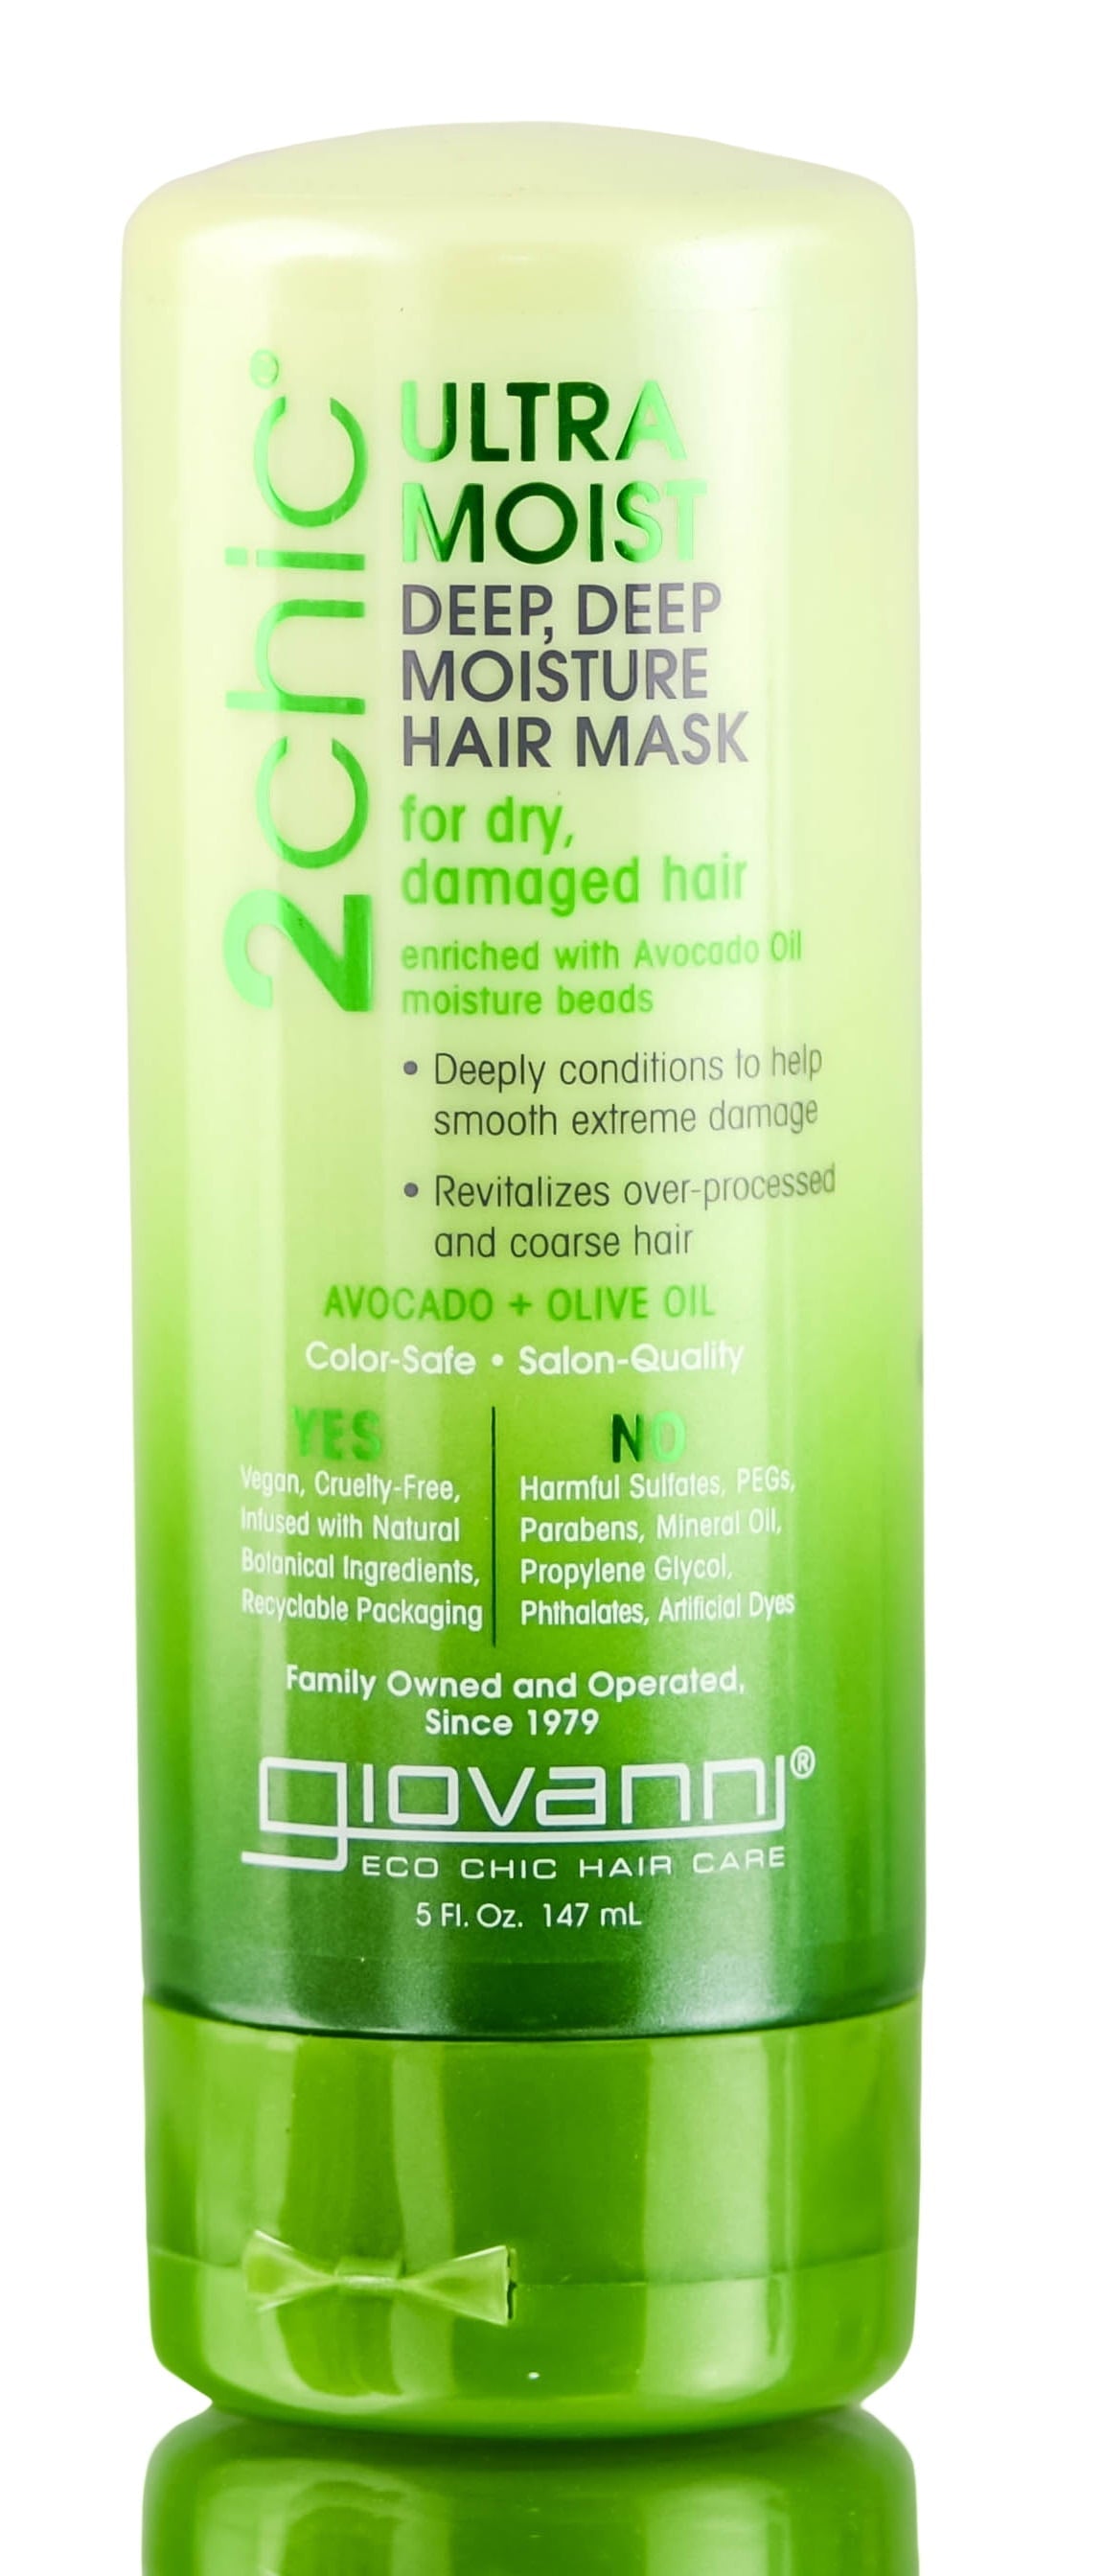 Giovanni 2Chic UltraMoist Deep Moisture Hair Mask Avocado and Olive Oil 5 oz Bottle